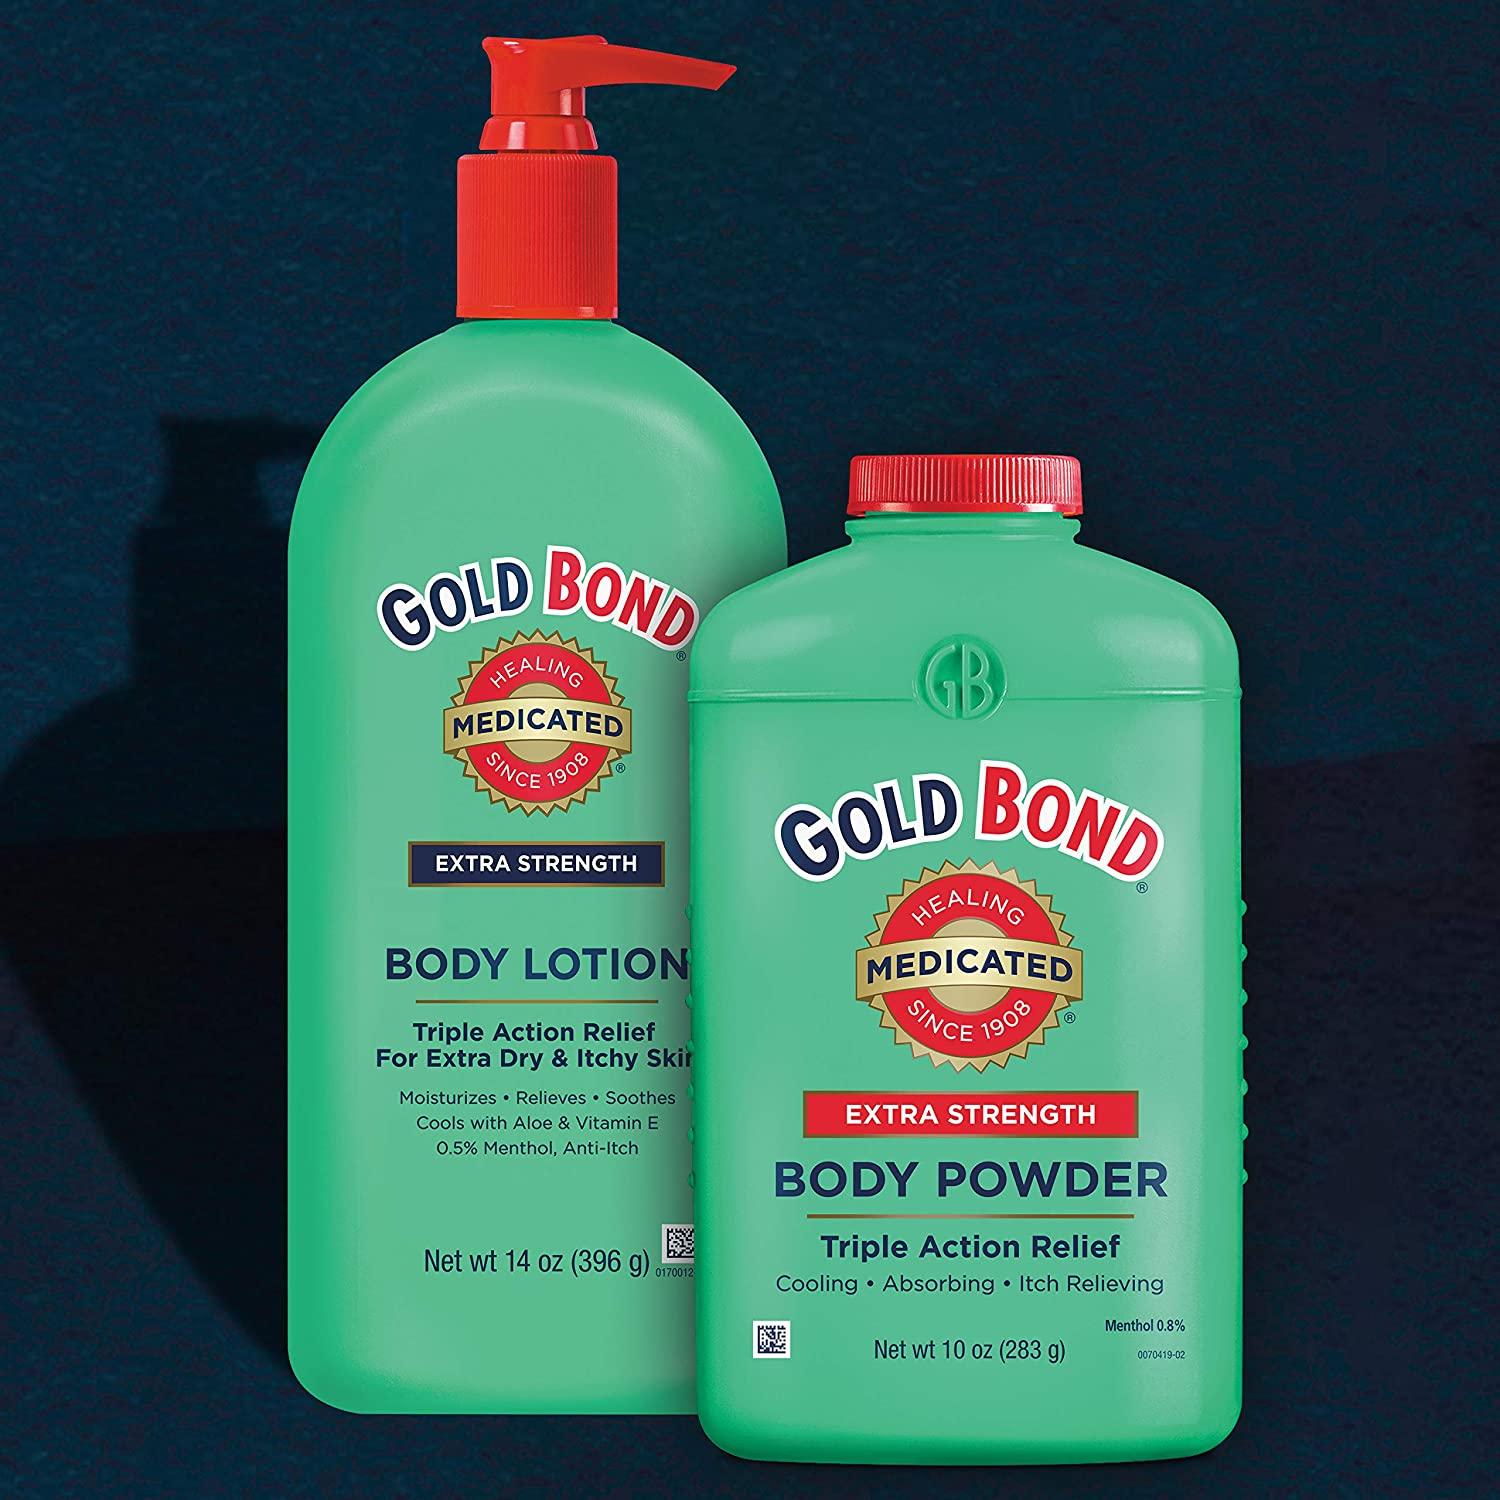 Baby Powder Body Spray (Double Strength), 4 Ounces